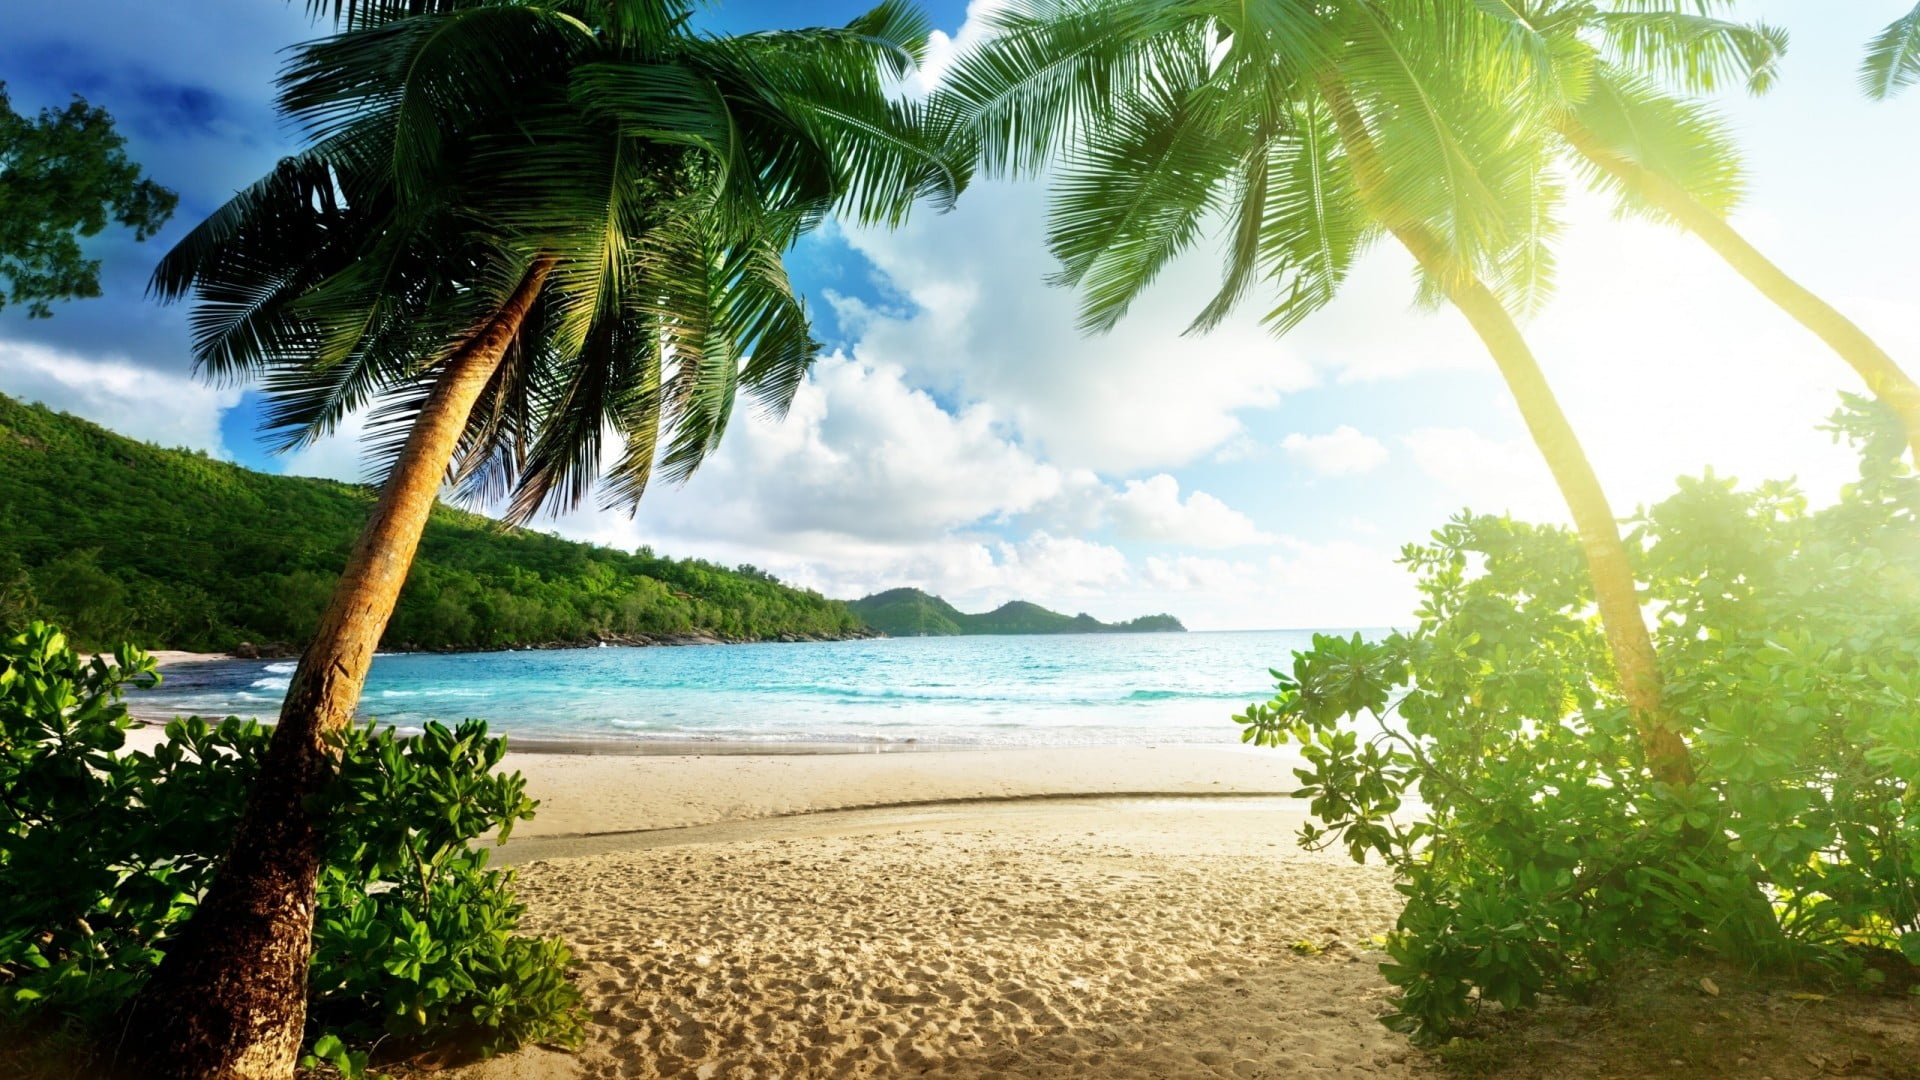 coconut trees near seashore, nature, landscape, tropical, beach